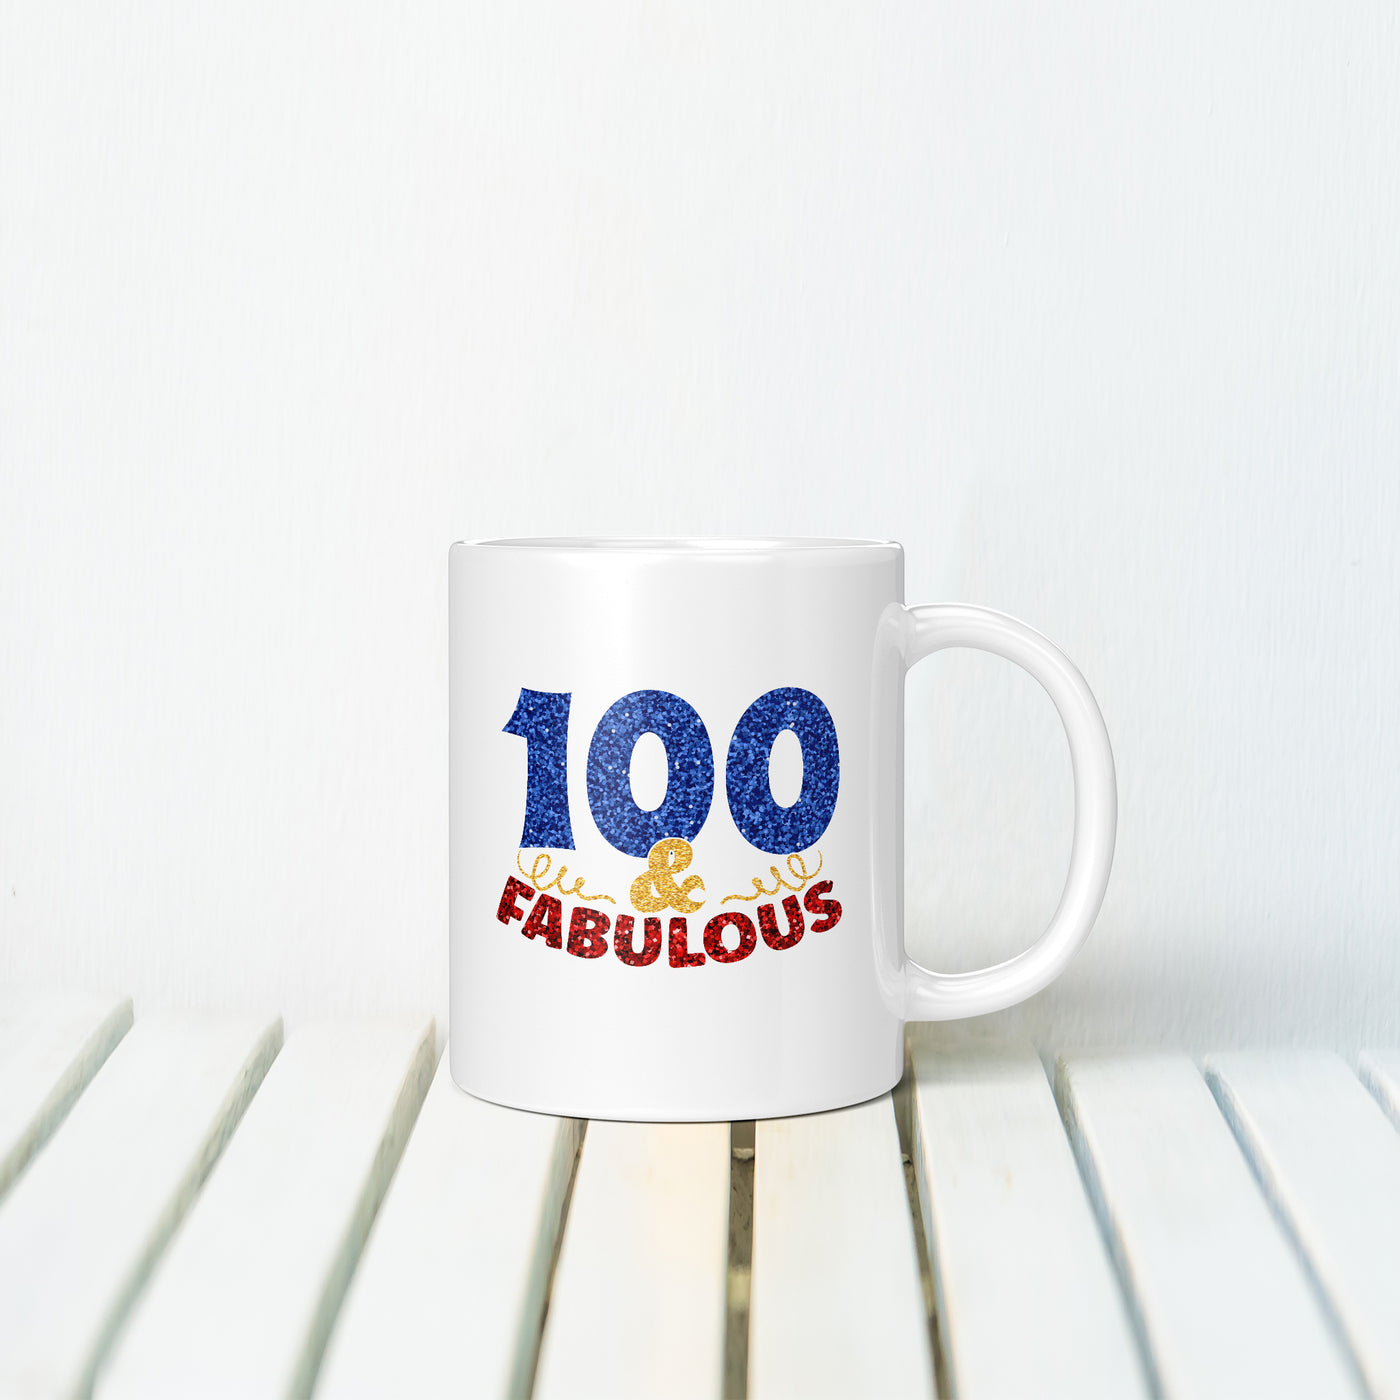 100 & Fabulous MUG